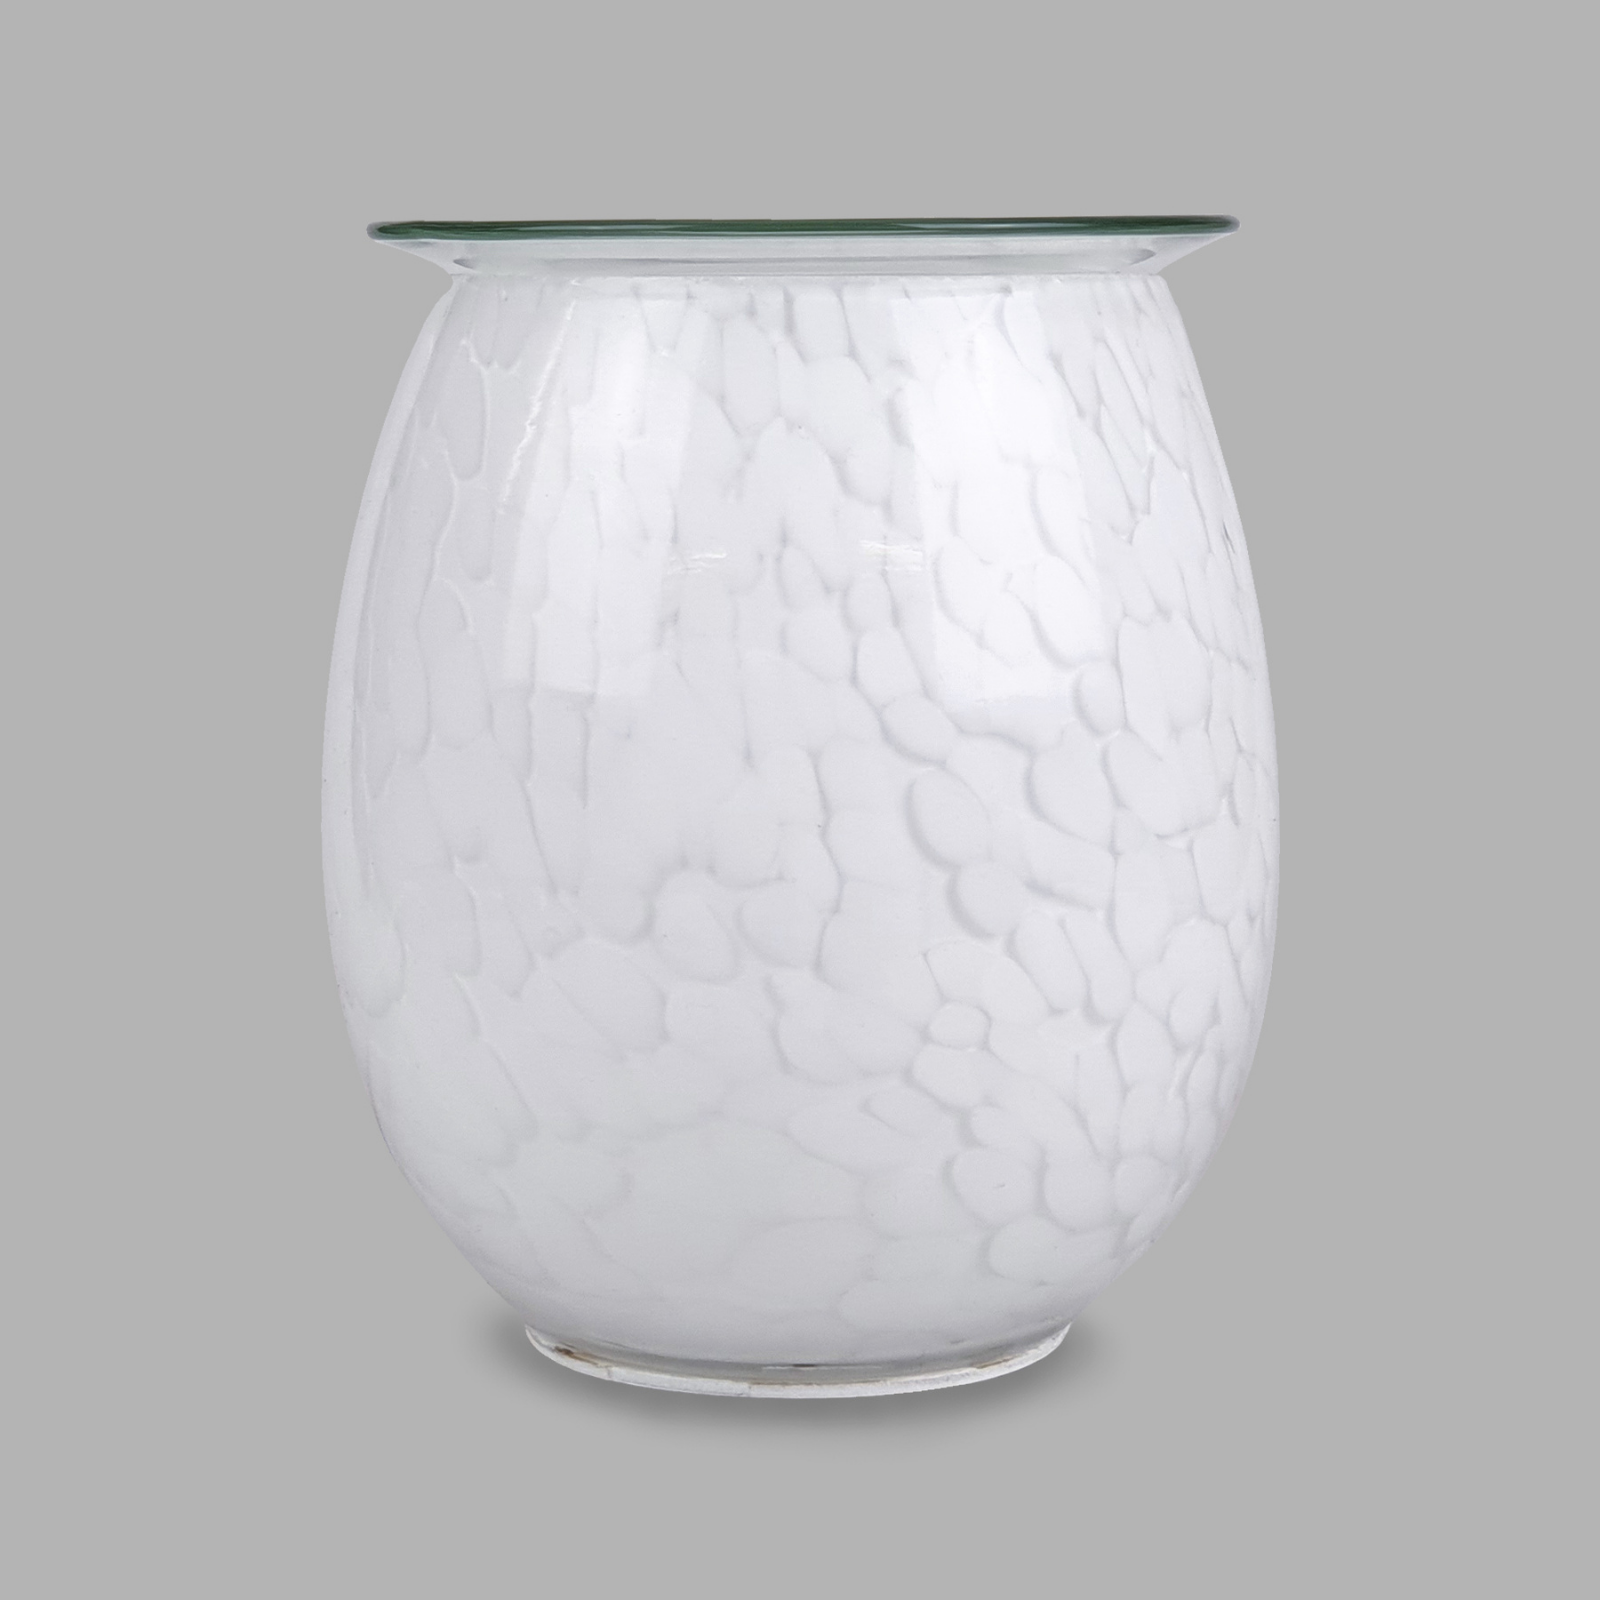 Electric Wax Burner Art Glass - Marble